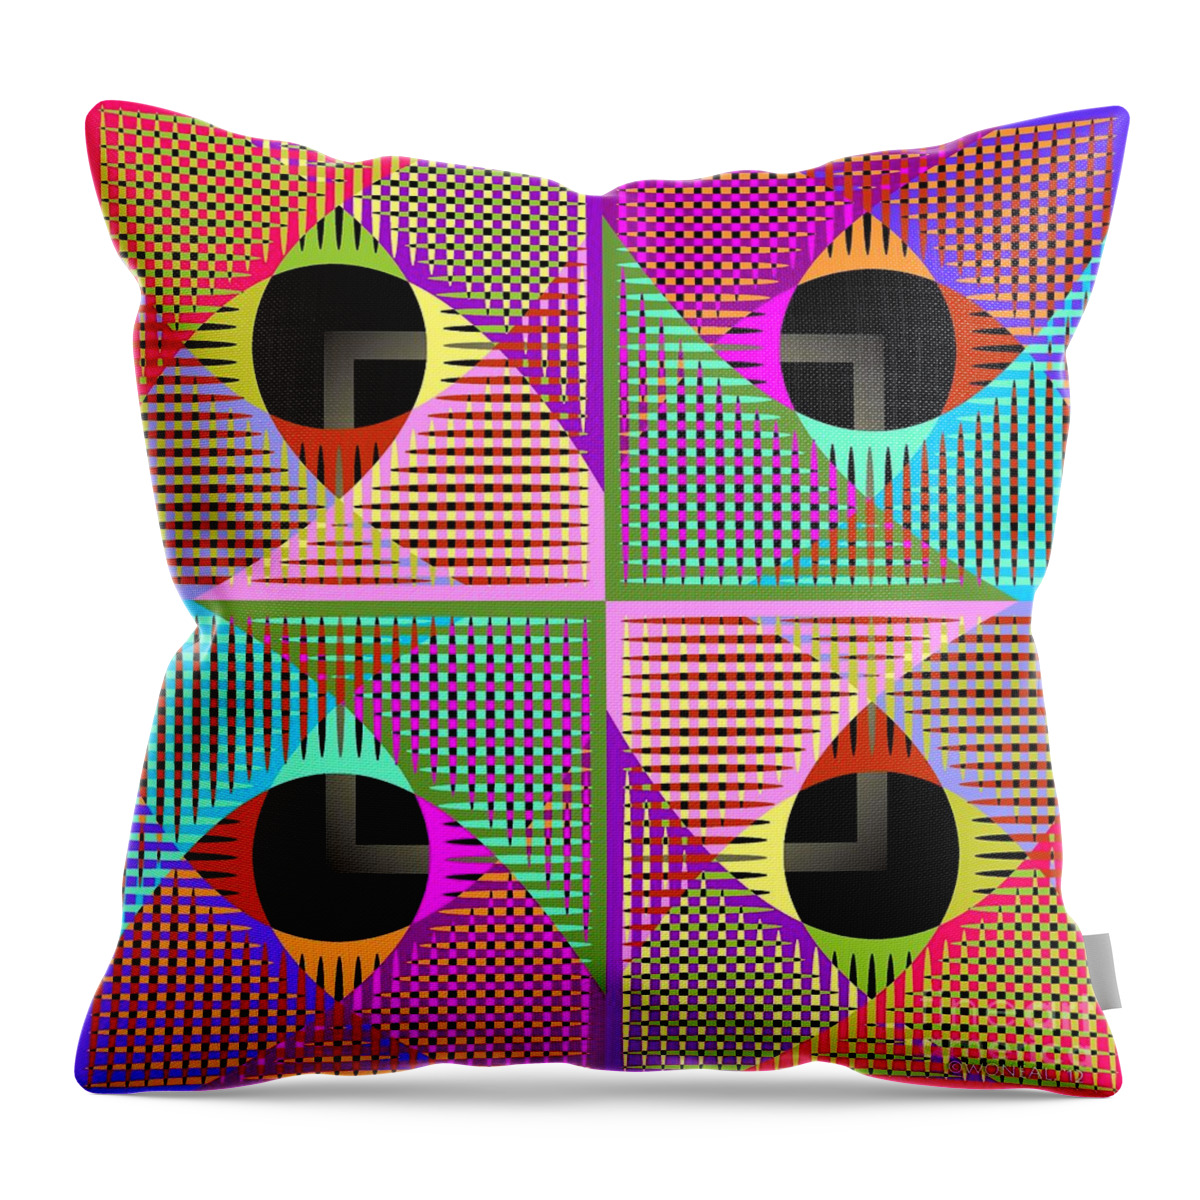 Art Objects Throw Pillow featuring the digital art Kaleidoscape by Walter Neal